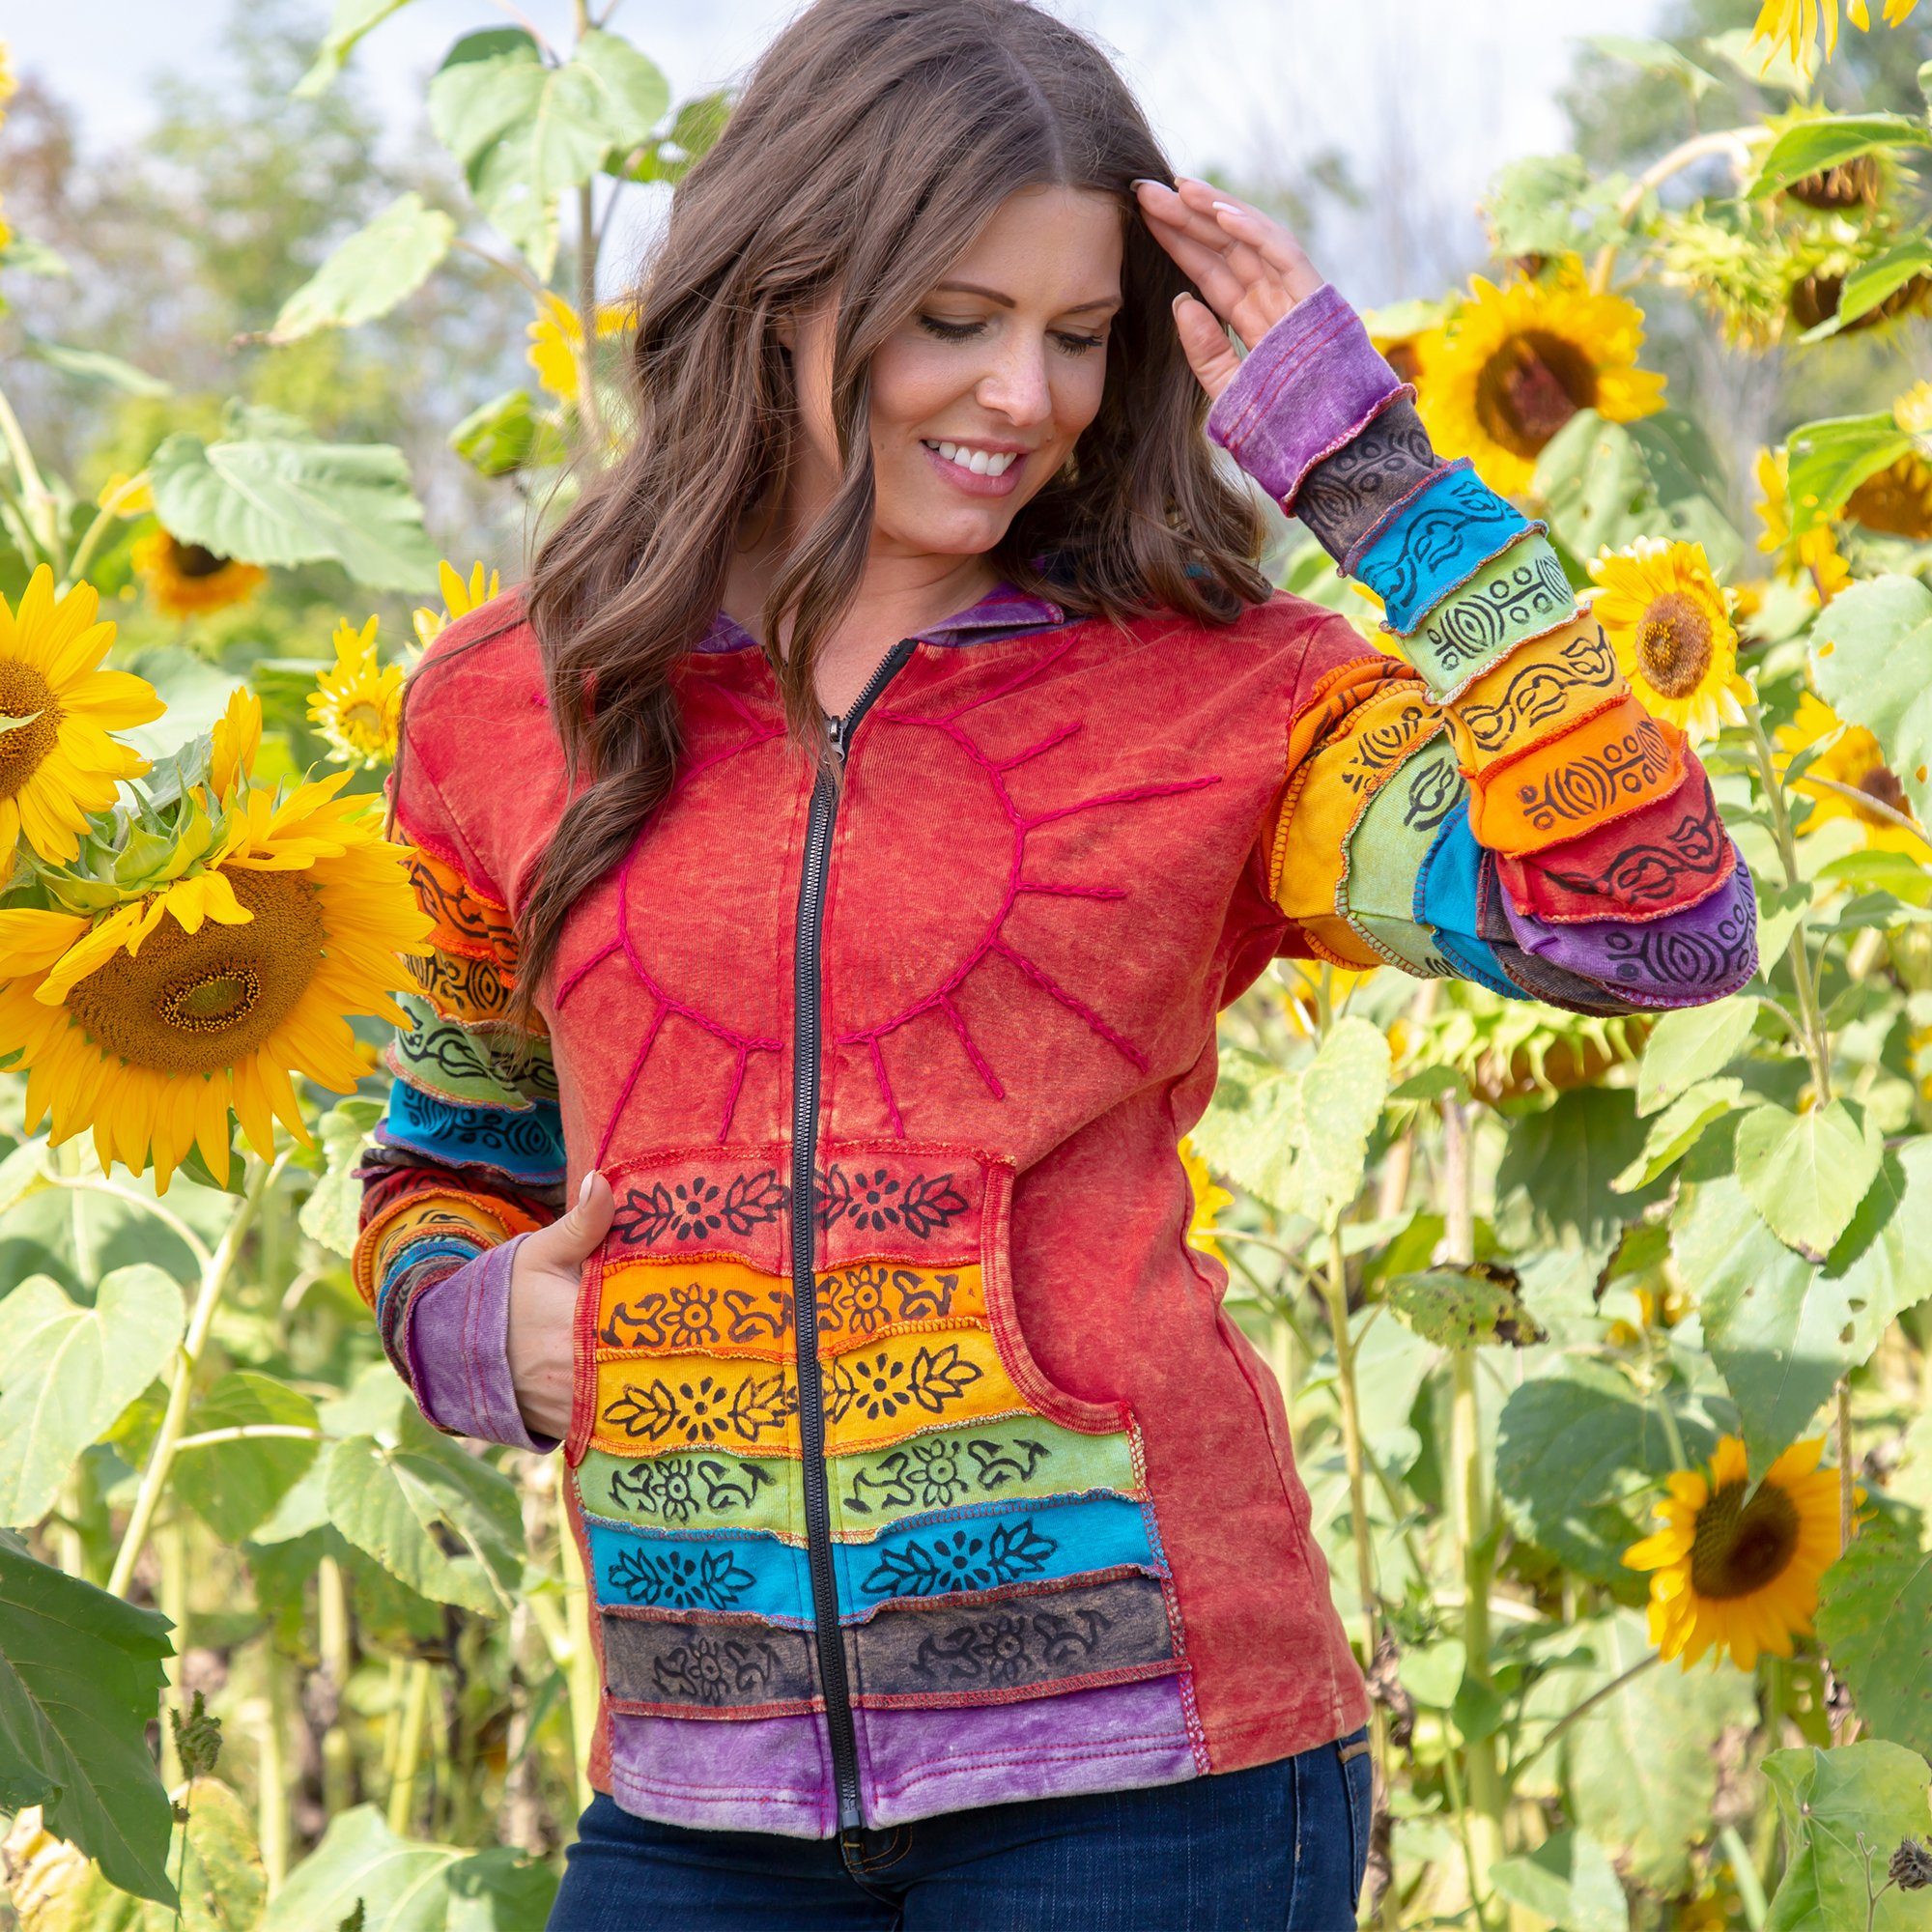 Sunshine Daydream Hooded Jacket , Fair Trade Women's Jacket - Rust - S/M